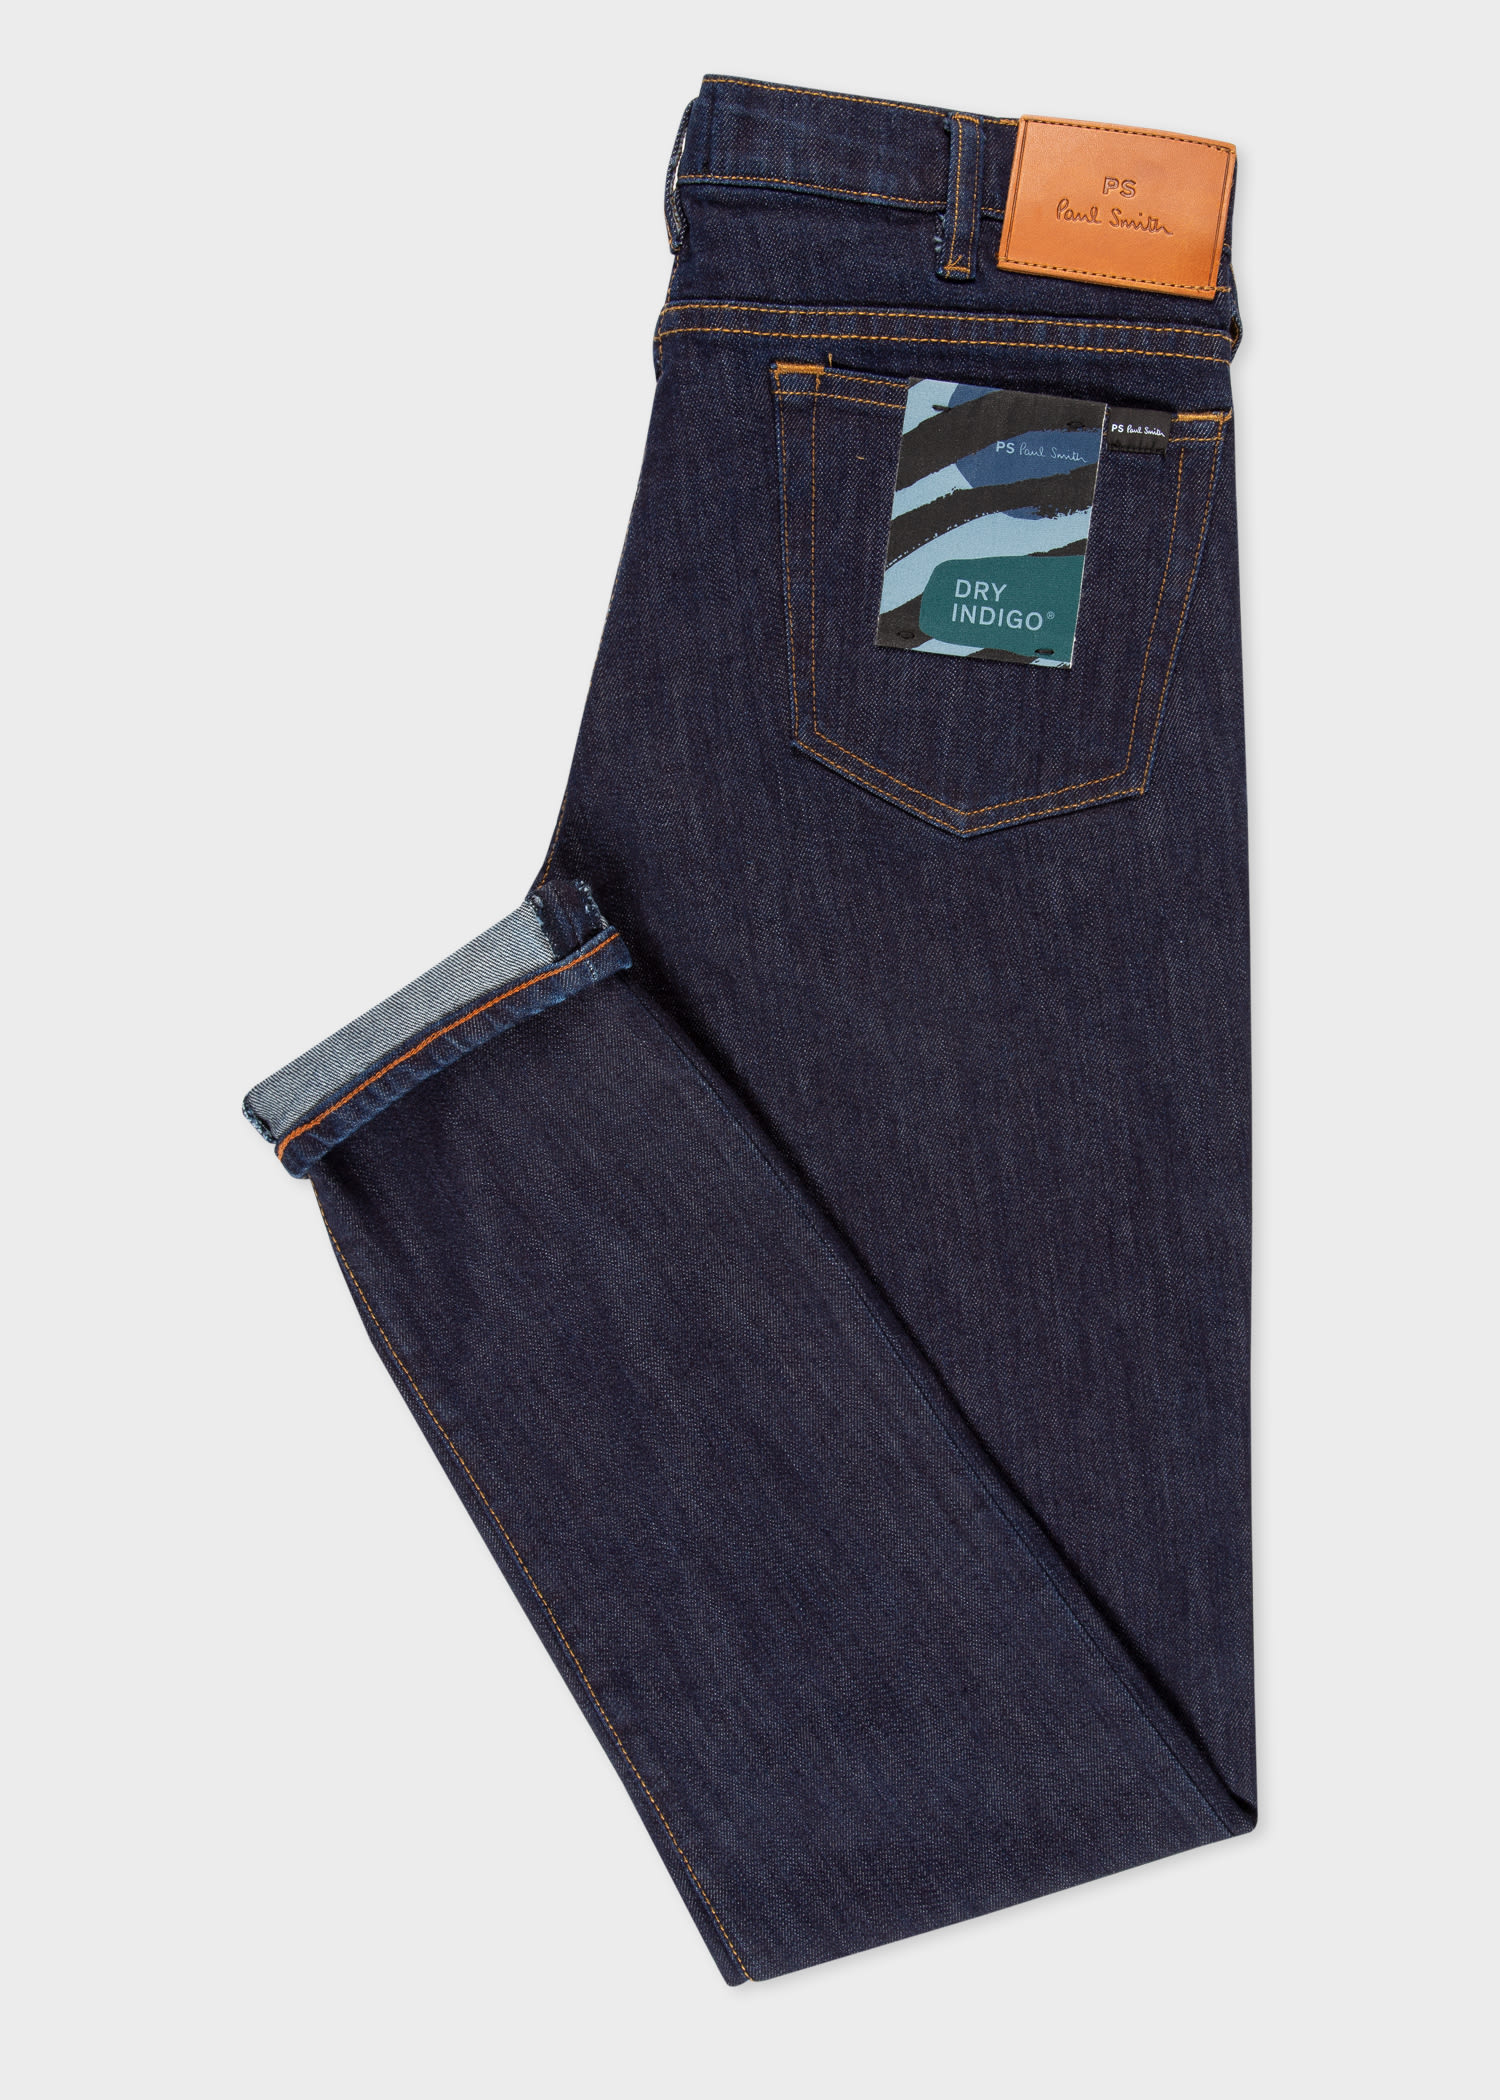 Duplikering hud Skygge Men's Slim-Standard 'Dry Indigo' Jeans - Paul Smith US